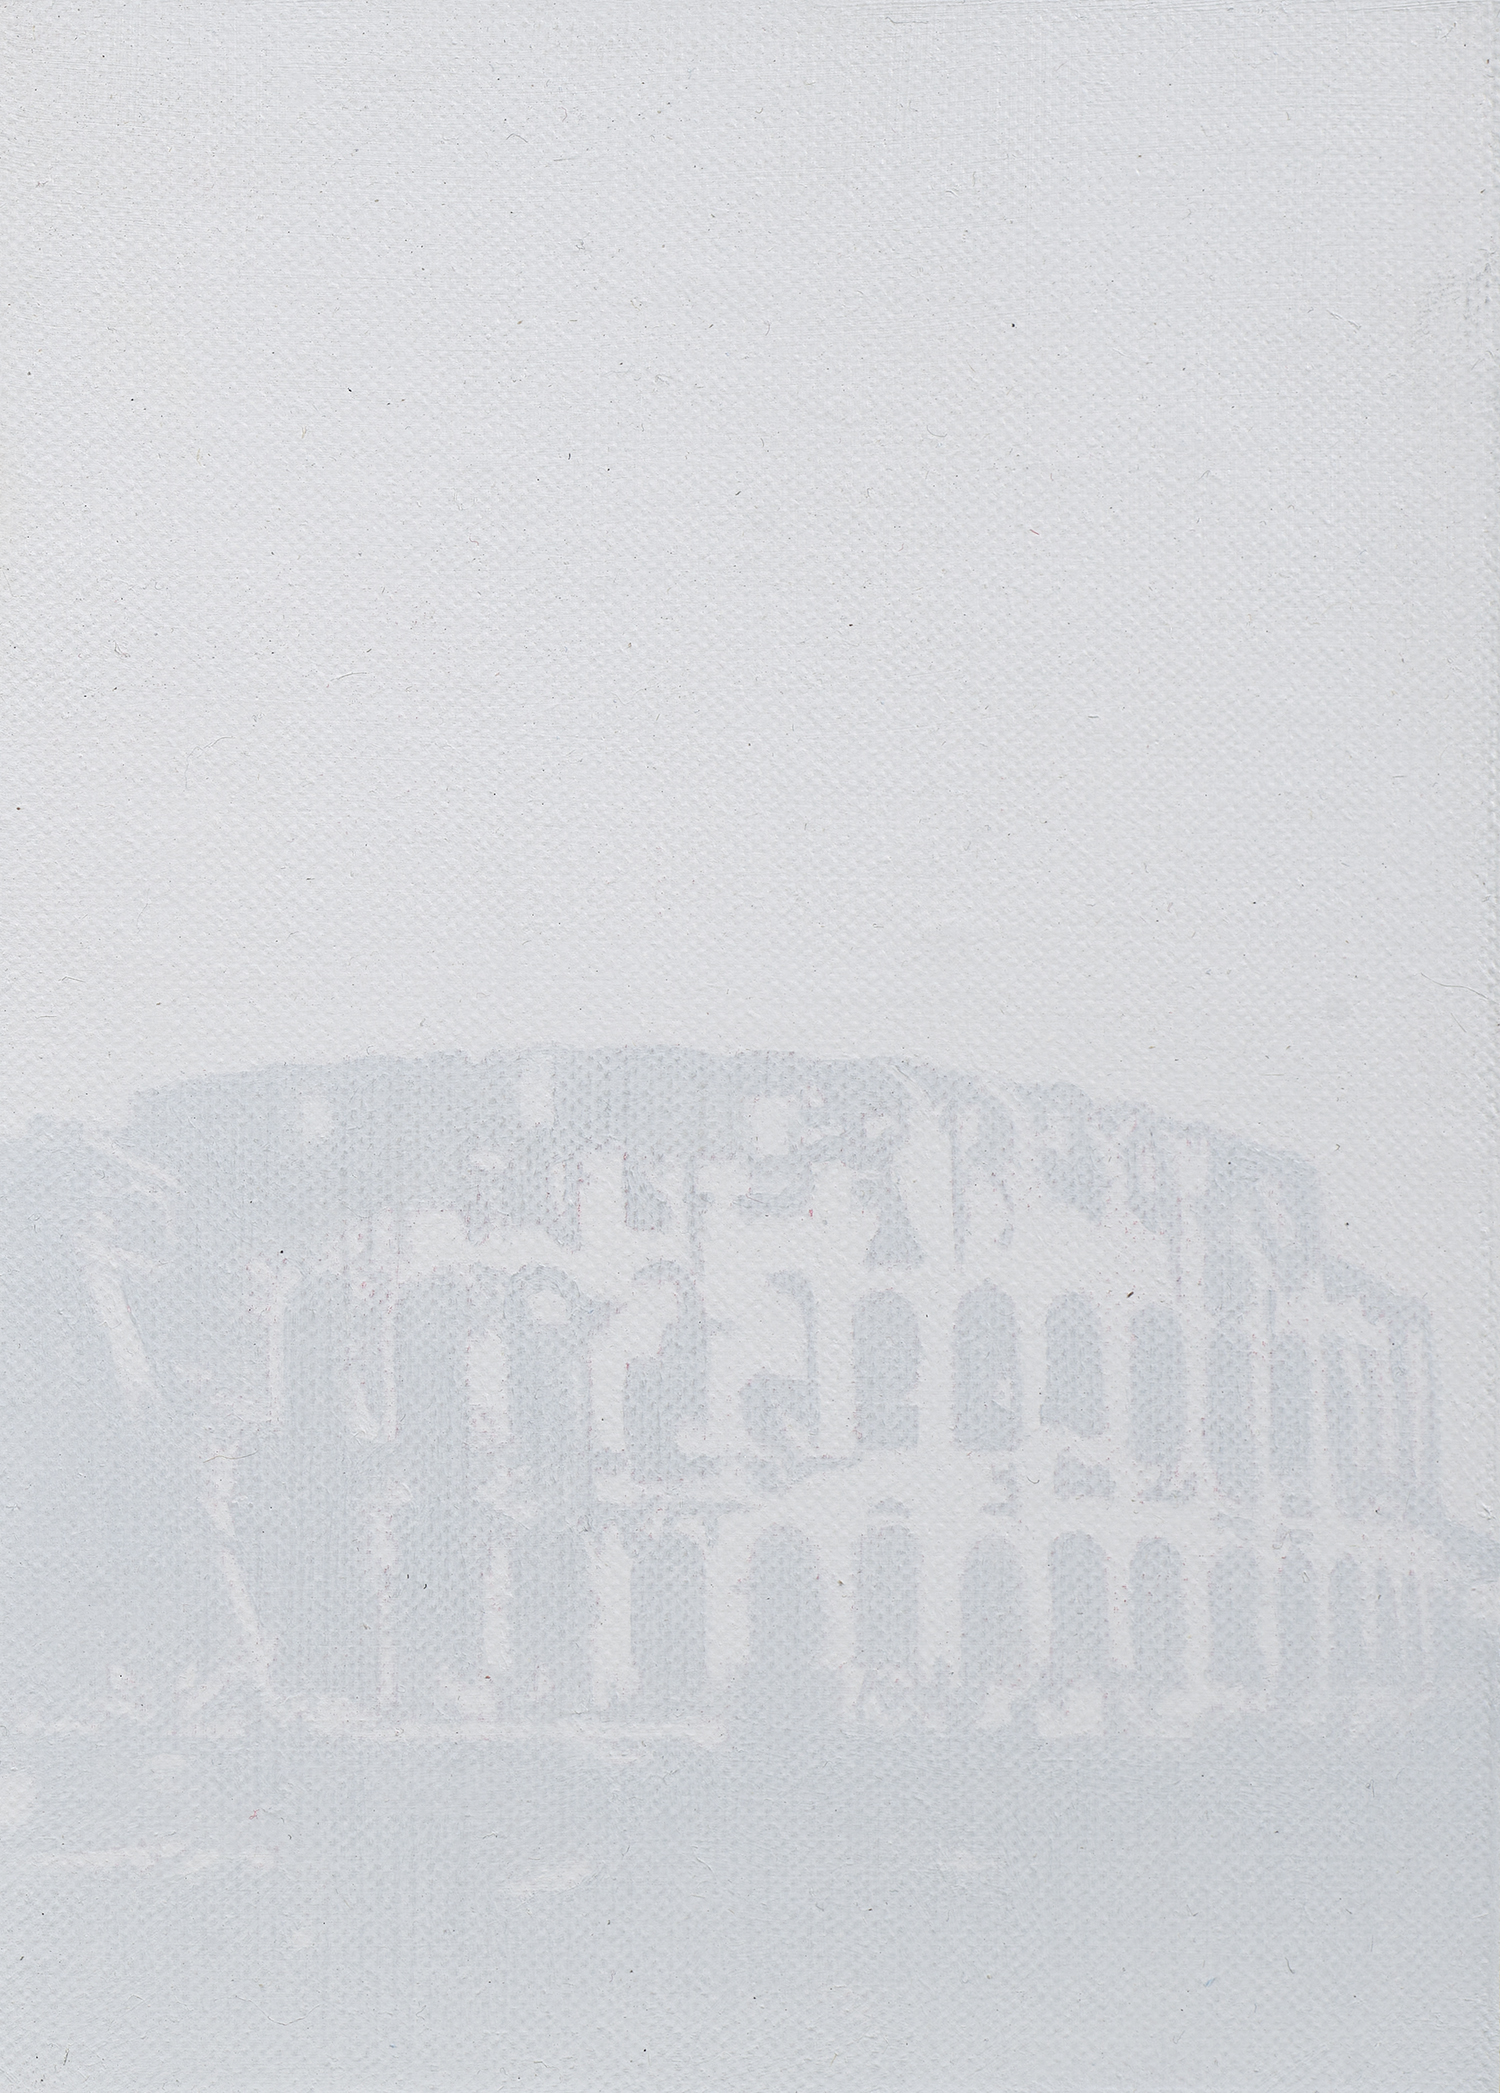 Colosseum (triptych) - Cox, Nigel